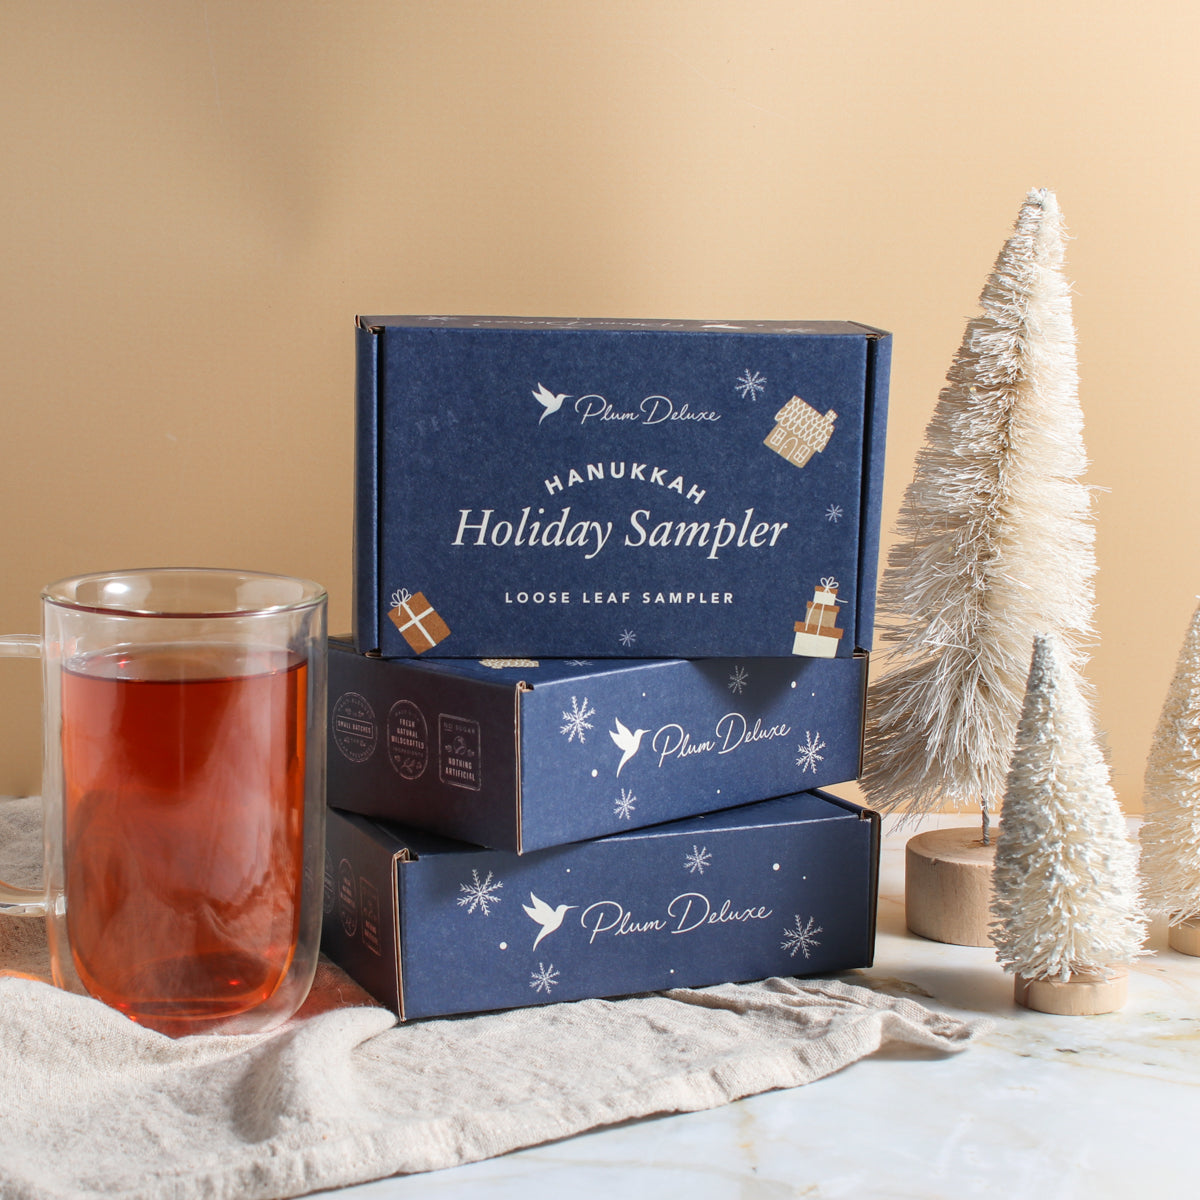 Hanukkah Holiday Sampler (8 Tea Sampler)